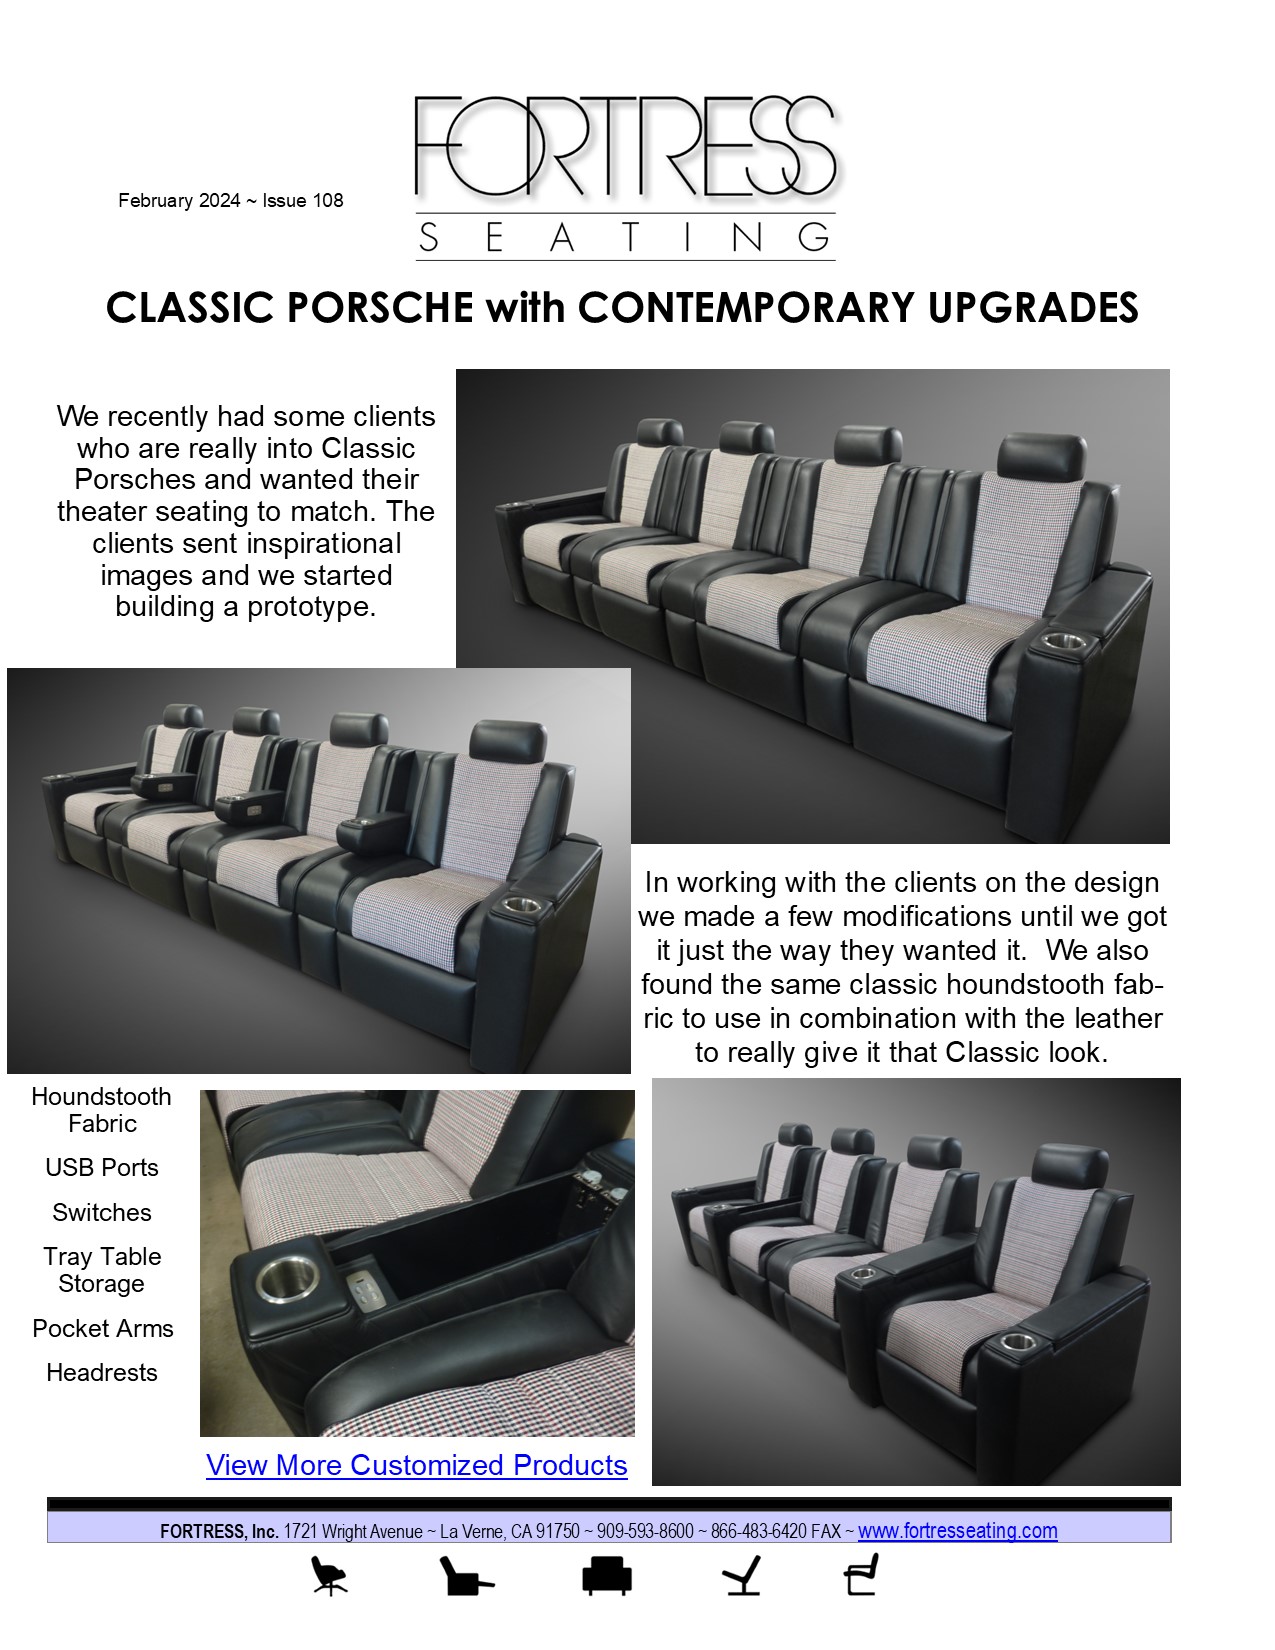 Classic Porsche~Contemporary Upgrades